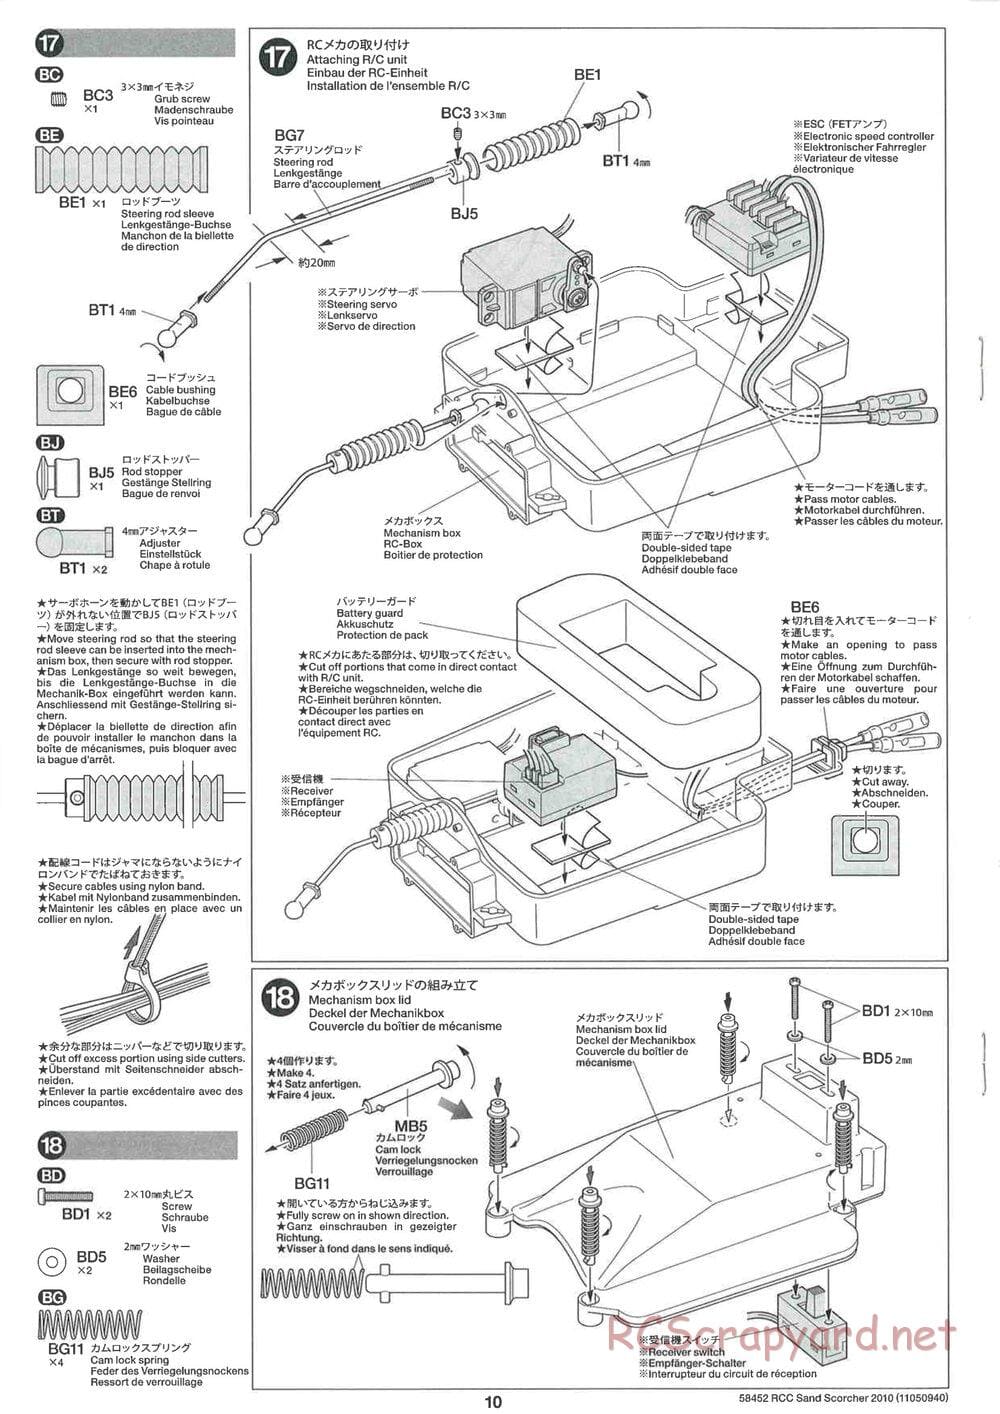 Tamiya - Sand Scorcher 2010 - SRB v1 Chassis - Manual - Page 10